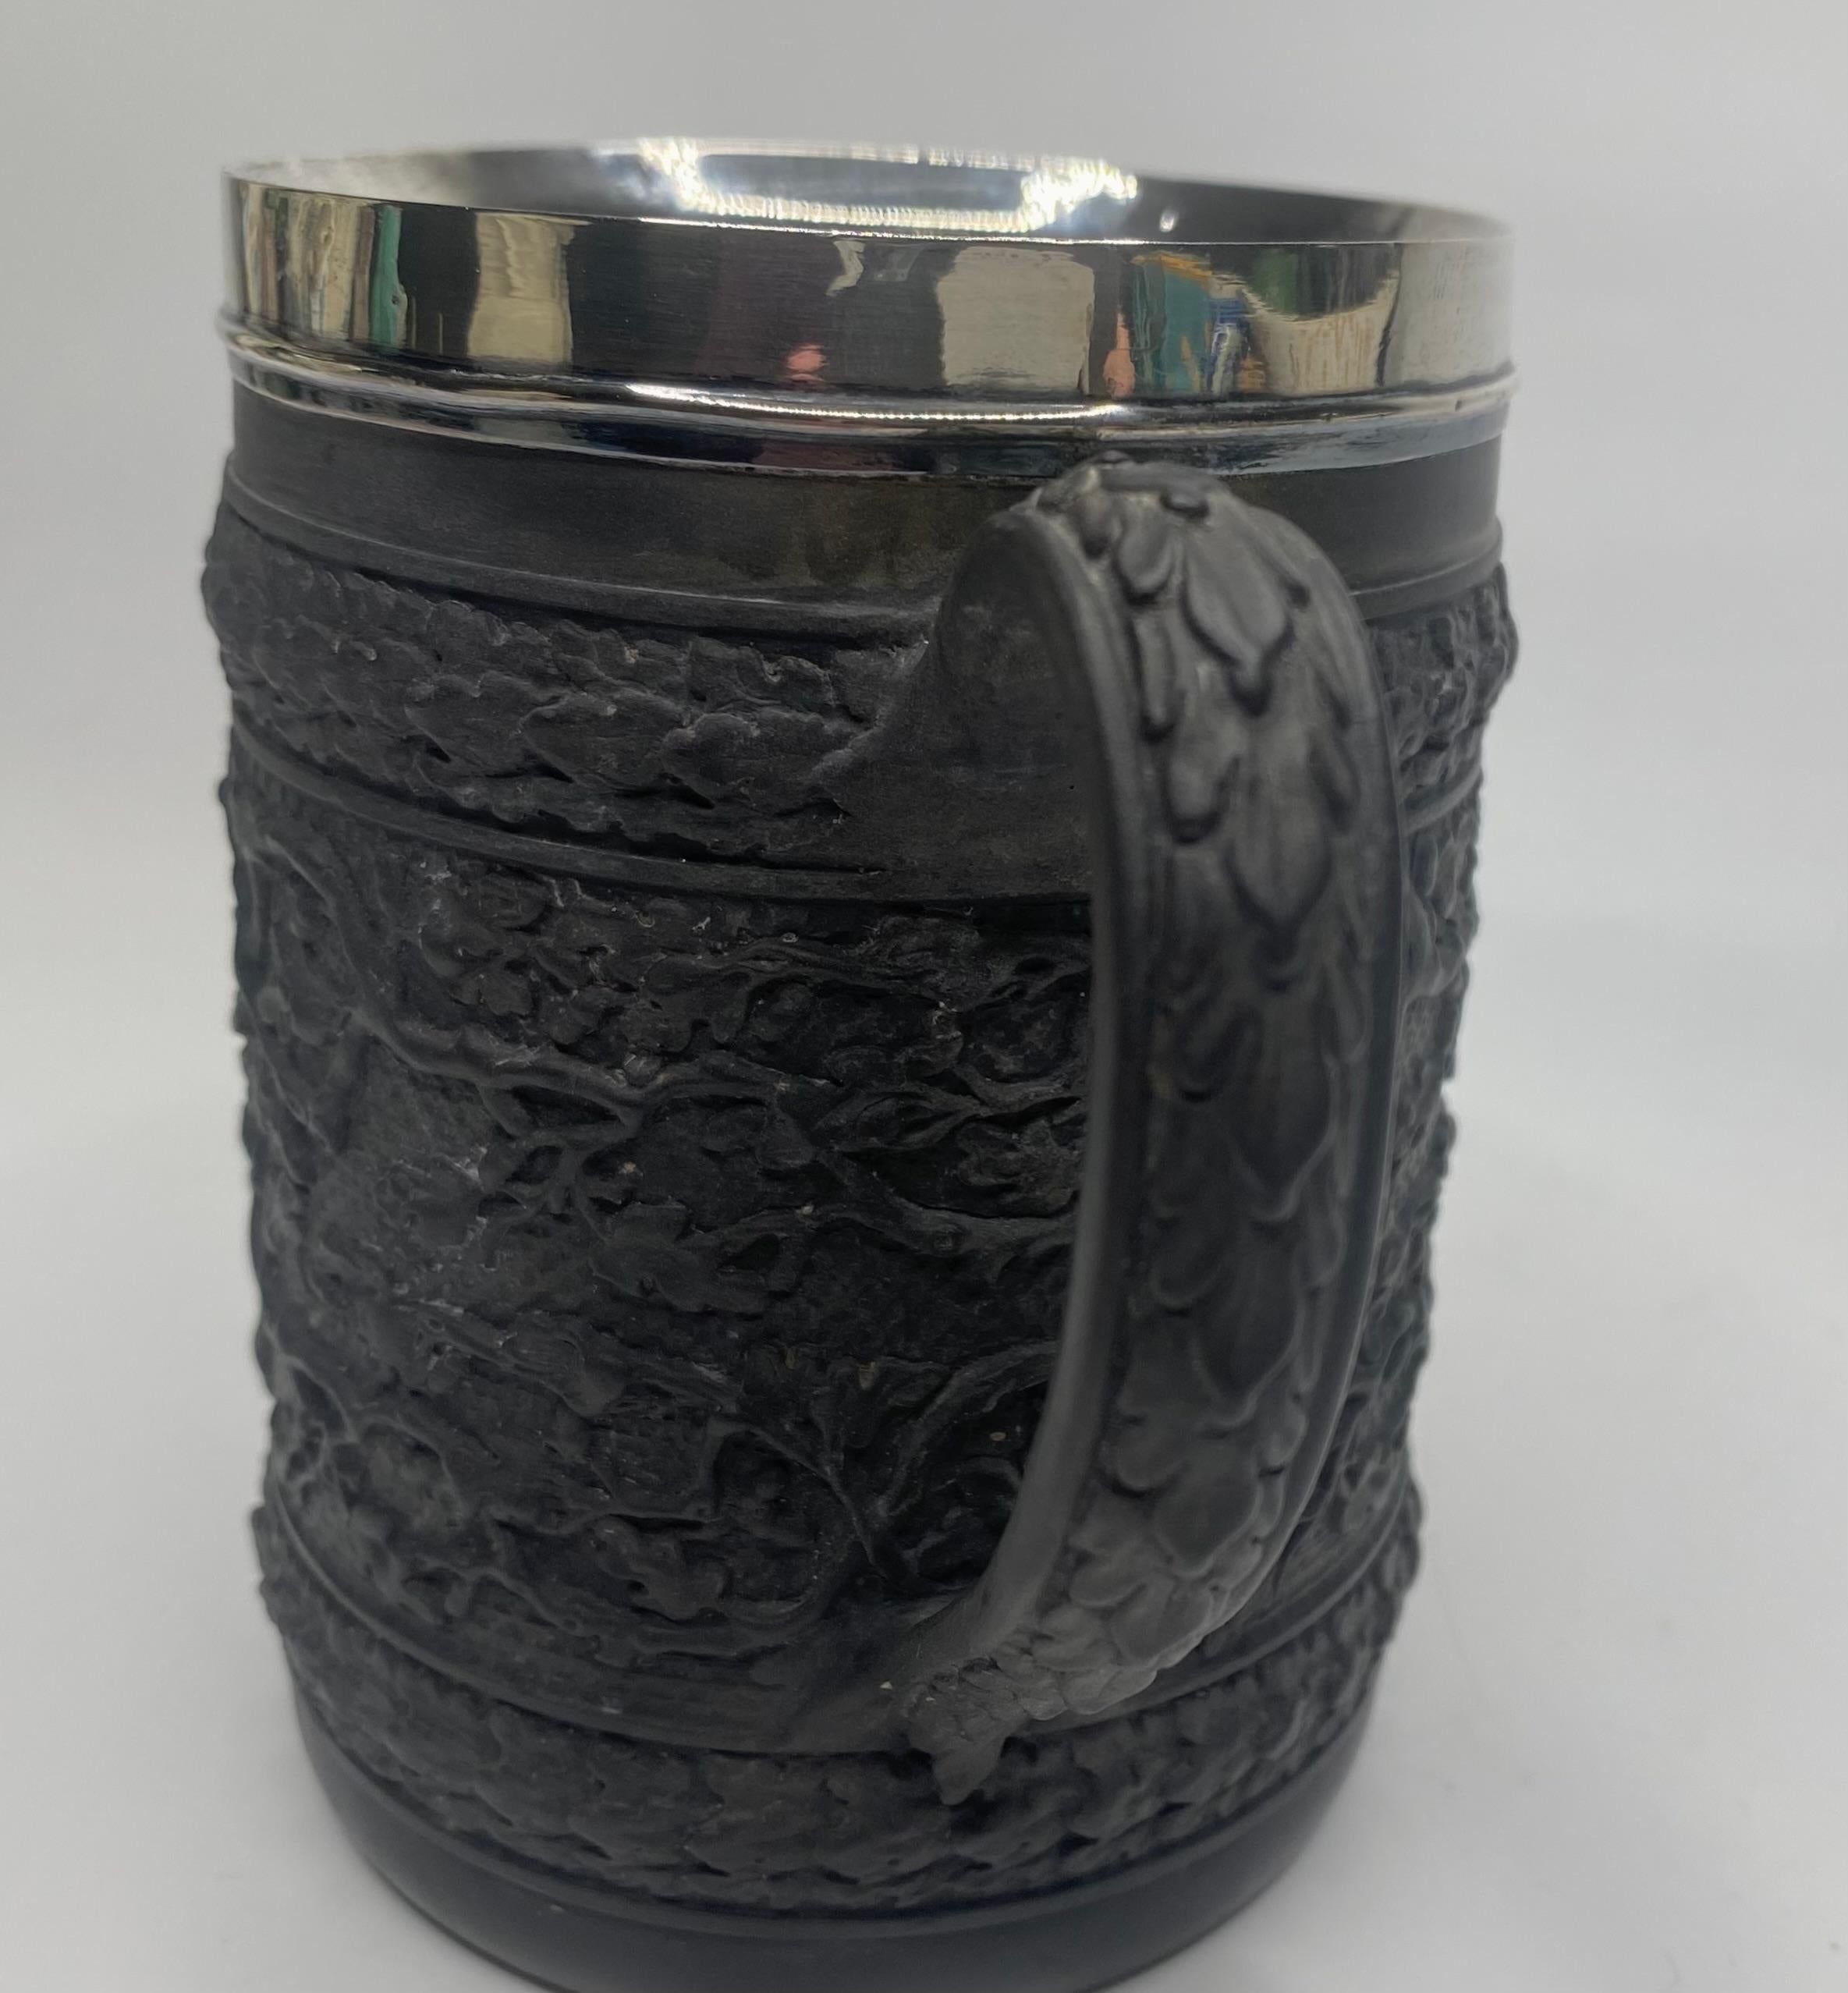 Fired Wedgwood black basalt mug, silver mounted, 1808.